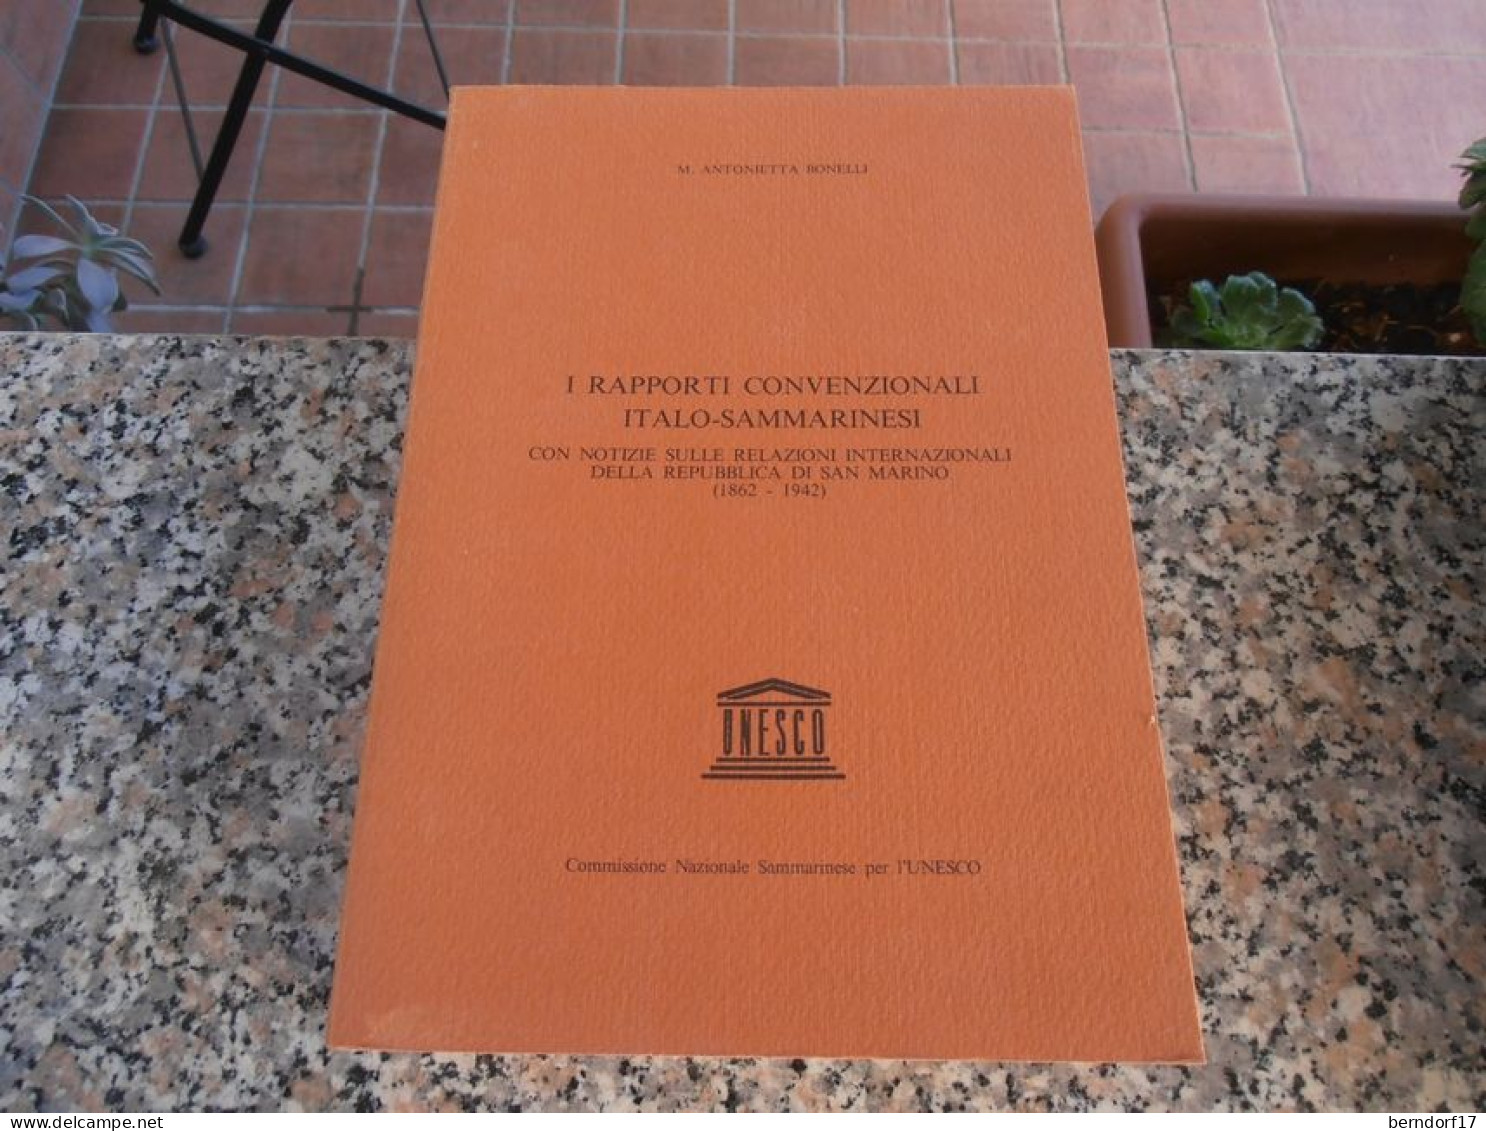 I RAPPORTI CONVENZIONALI ITALO-SAMMARINESI - M. ANTONIETTA BONELLI - Maatschappij, Politiek, Economie